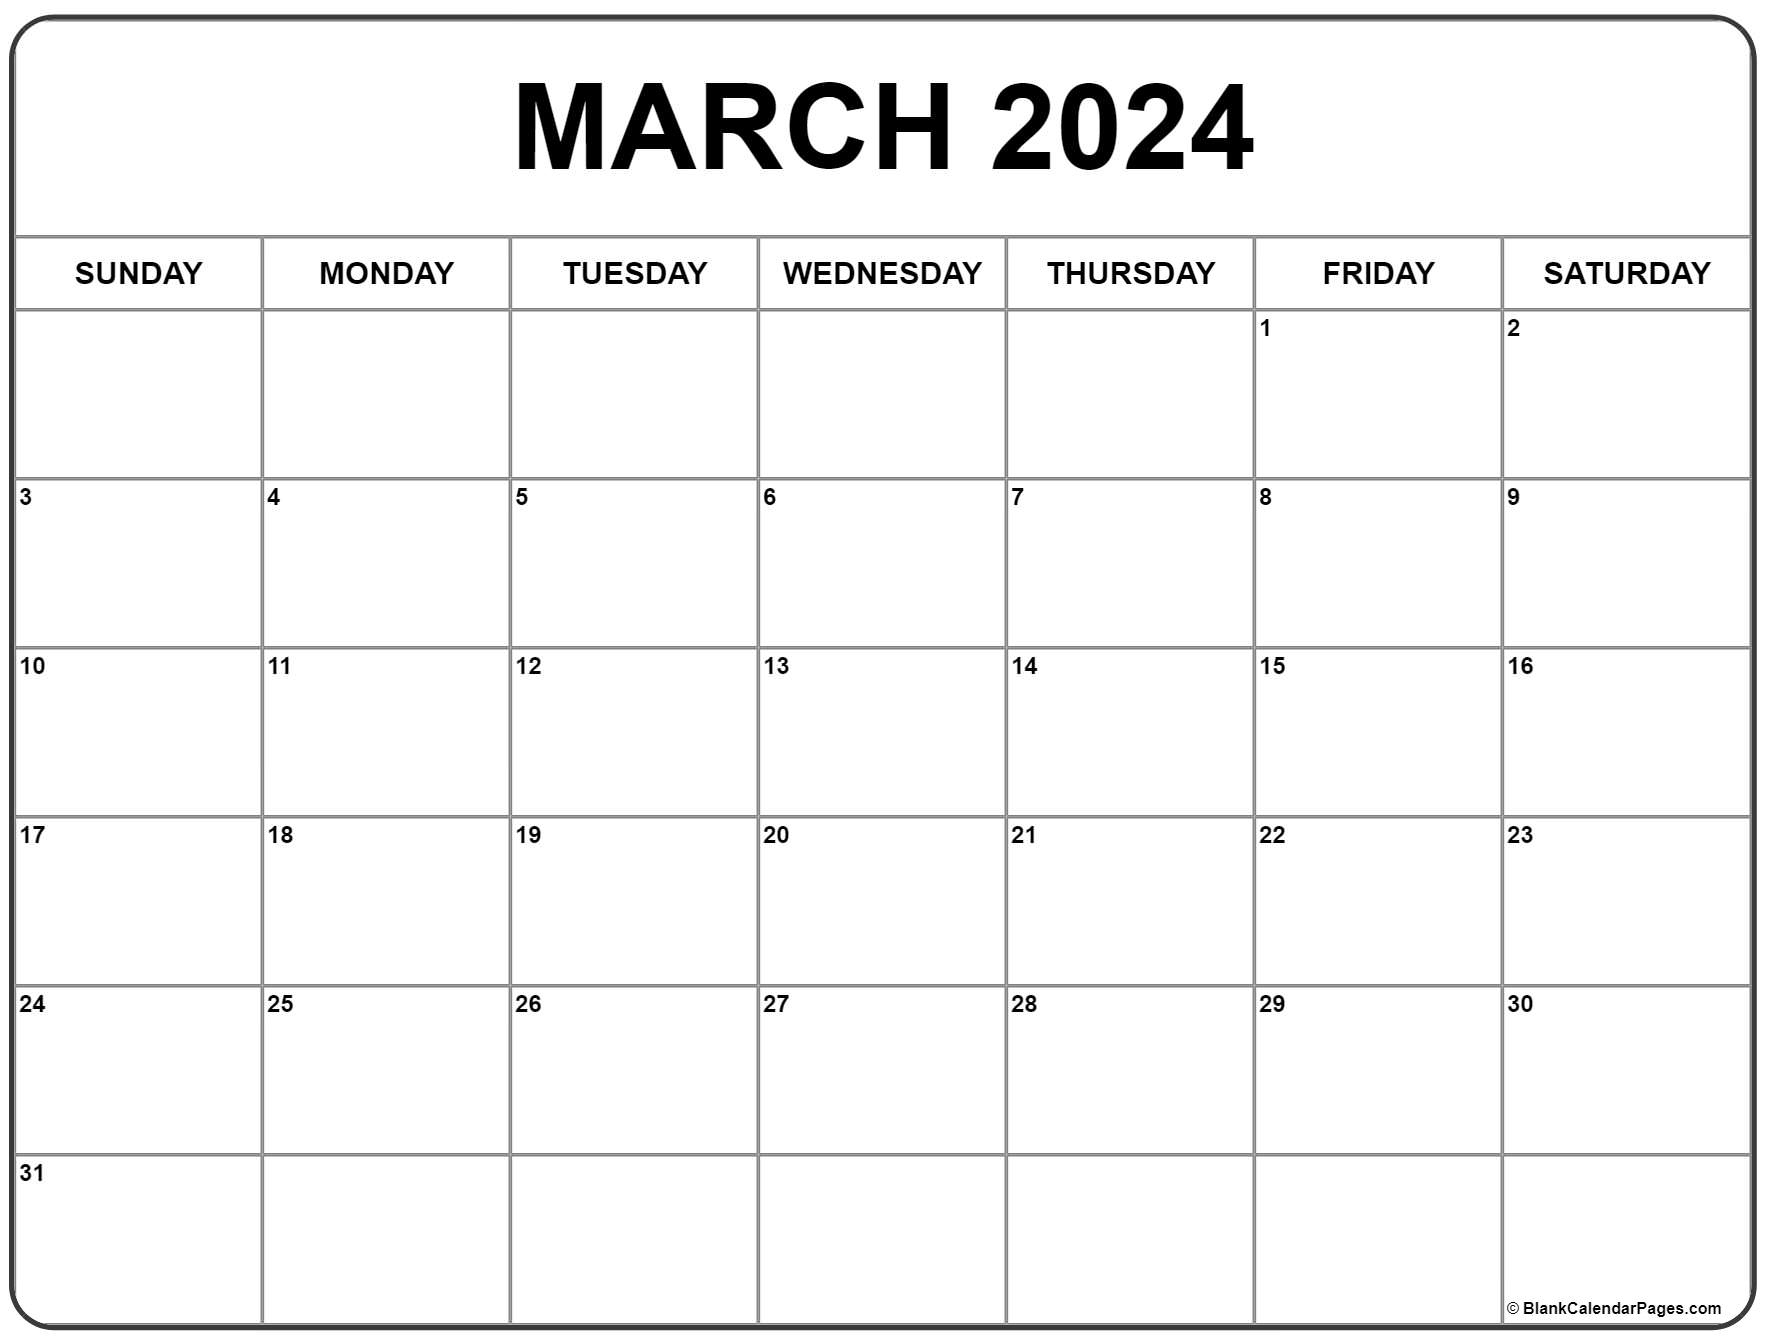 March 2024 Calendar | Free Printable Calendar for 2024 March Calendar Printable